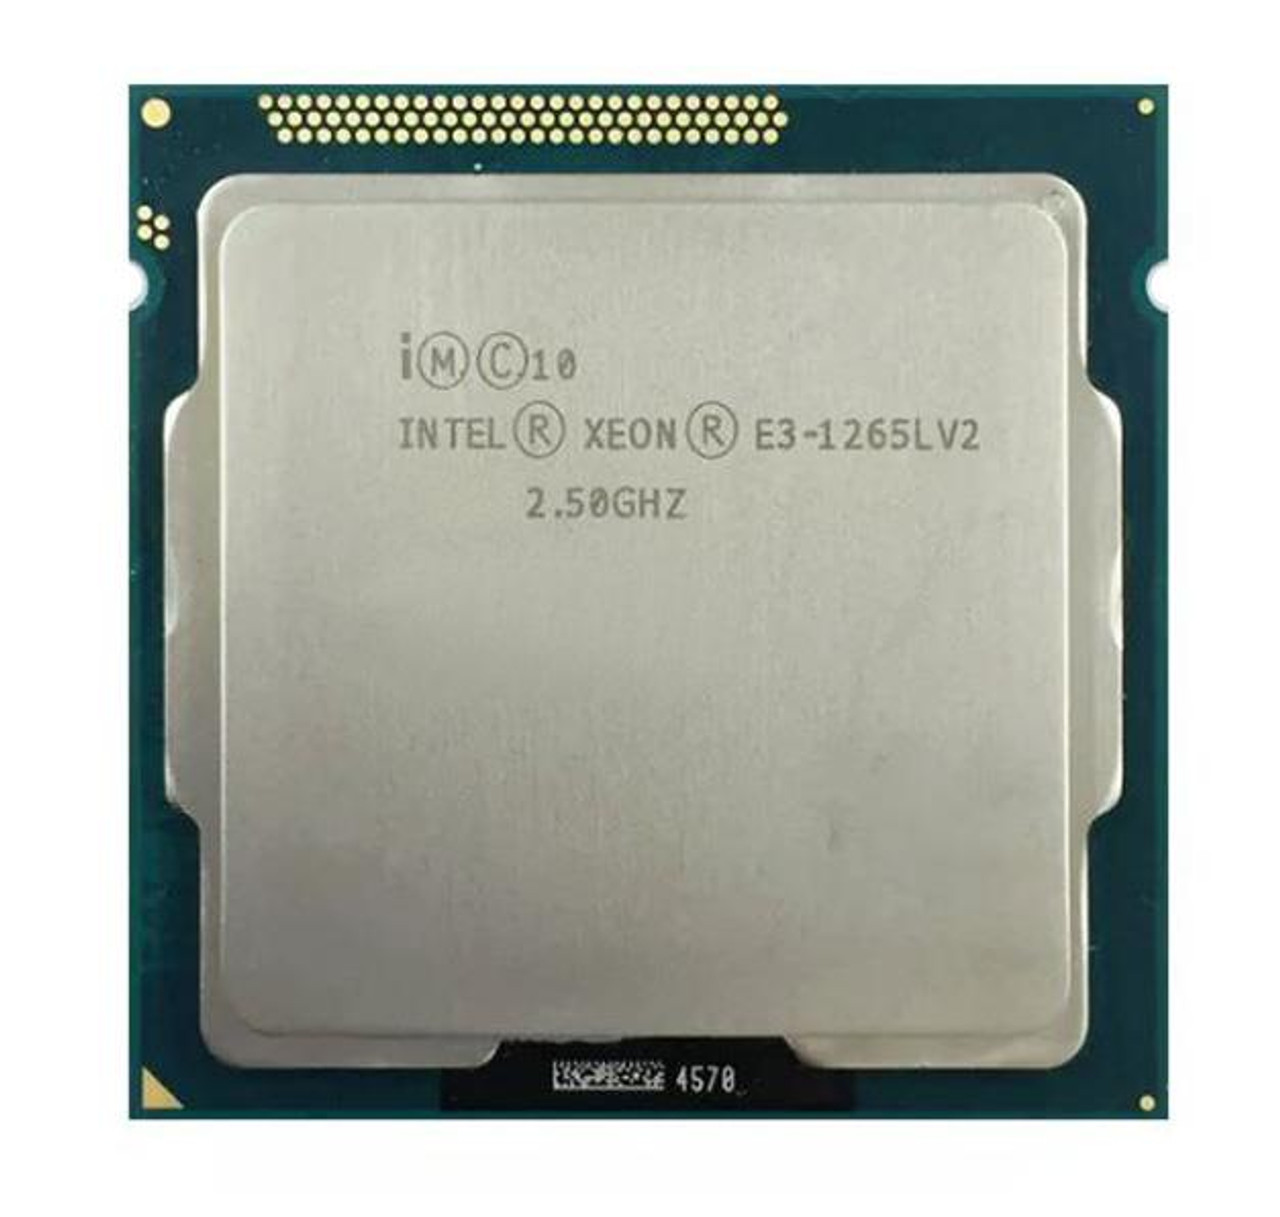 Fujitsu 2.50GHz 5.00GT/s DMI 8MB L3 Cache Socket FCLGA1155 Intel Xeon E3-1265L V2 Quad-Core Processor Upgrade